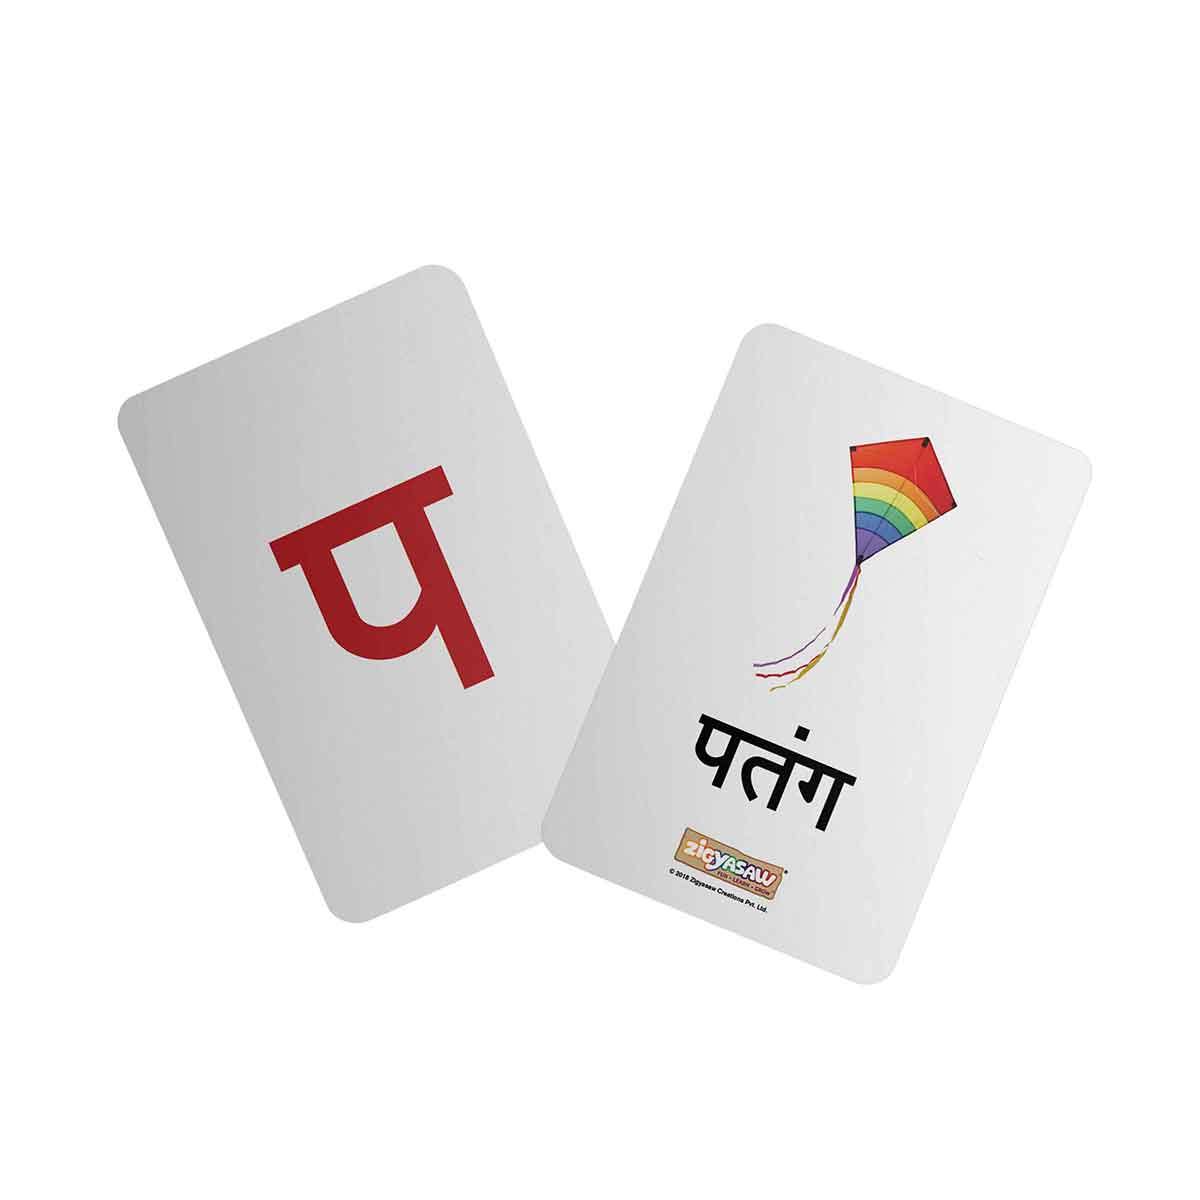 Zigyasaw Hindi Varnamala educational flash cards freeshipping - Zigyasaw